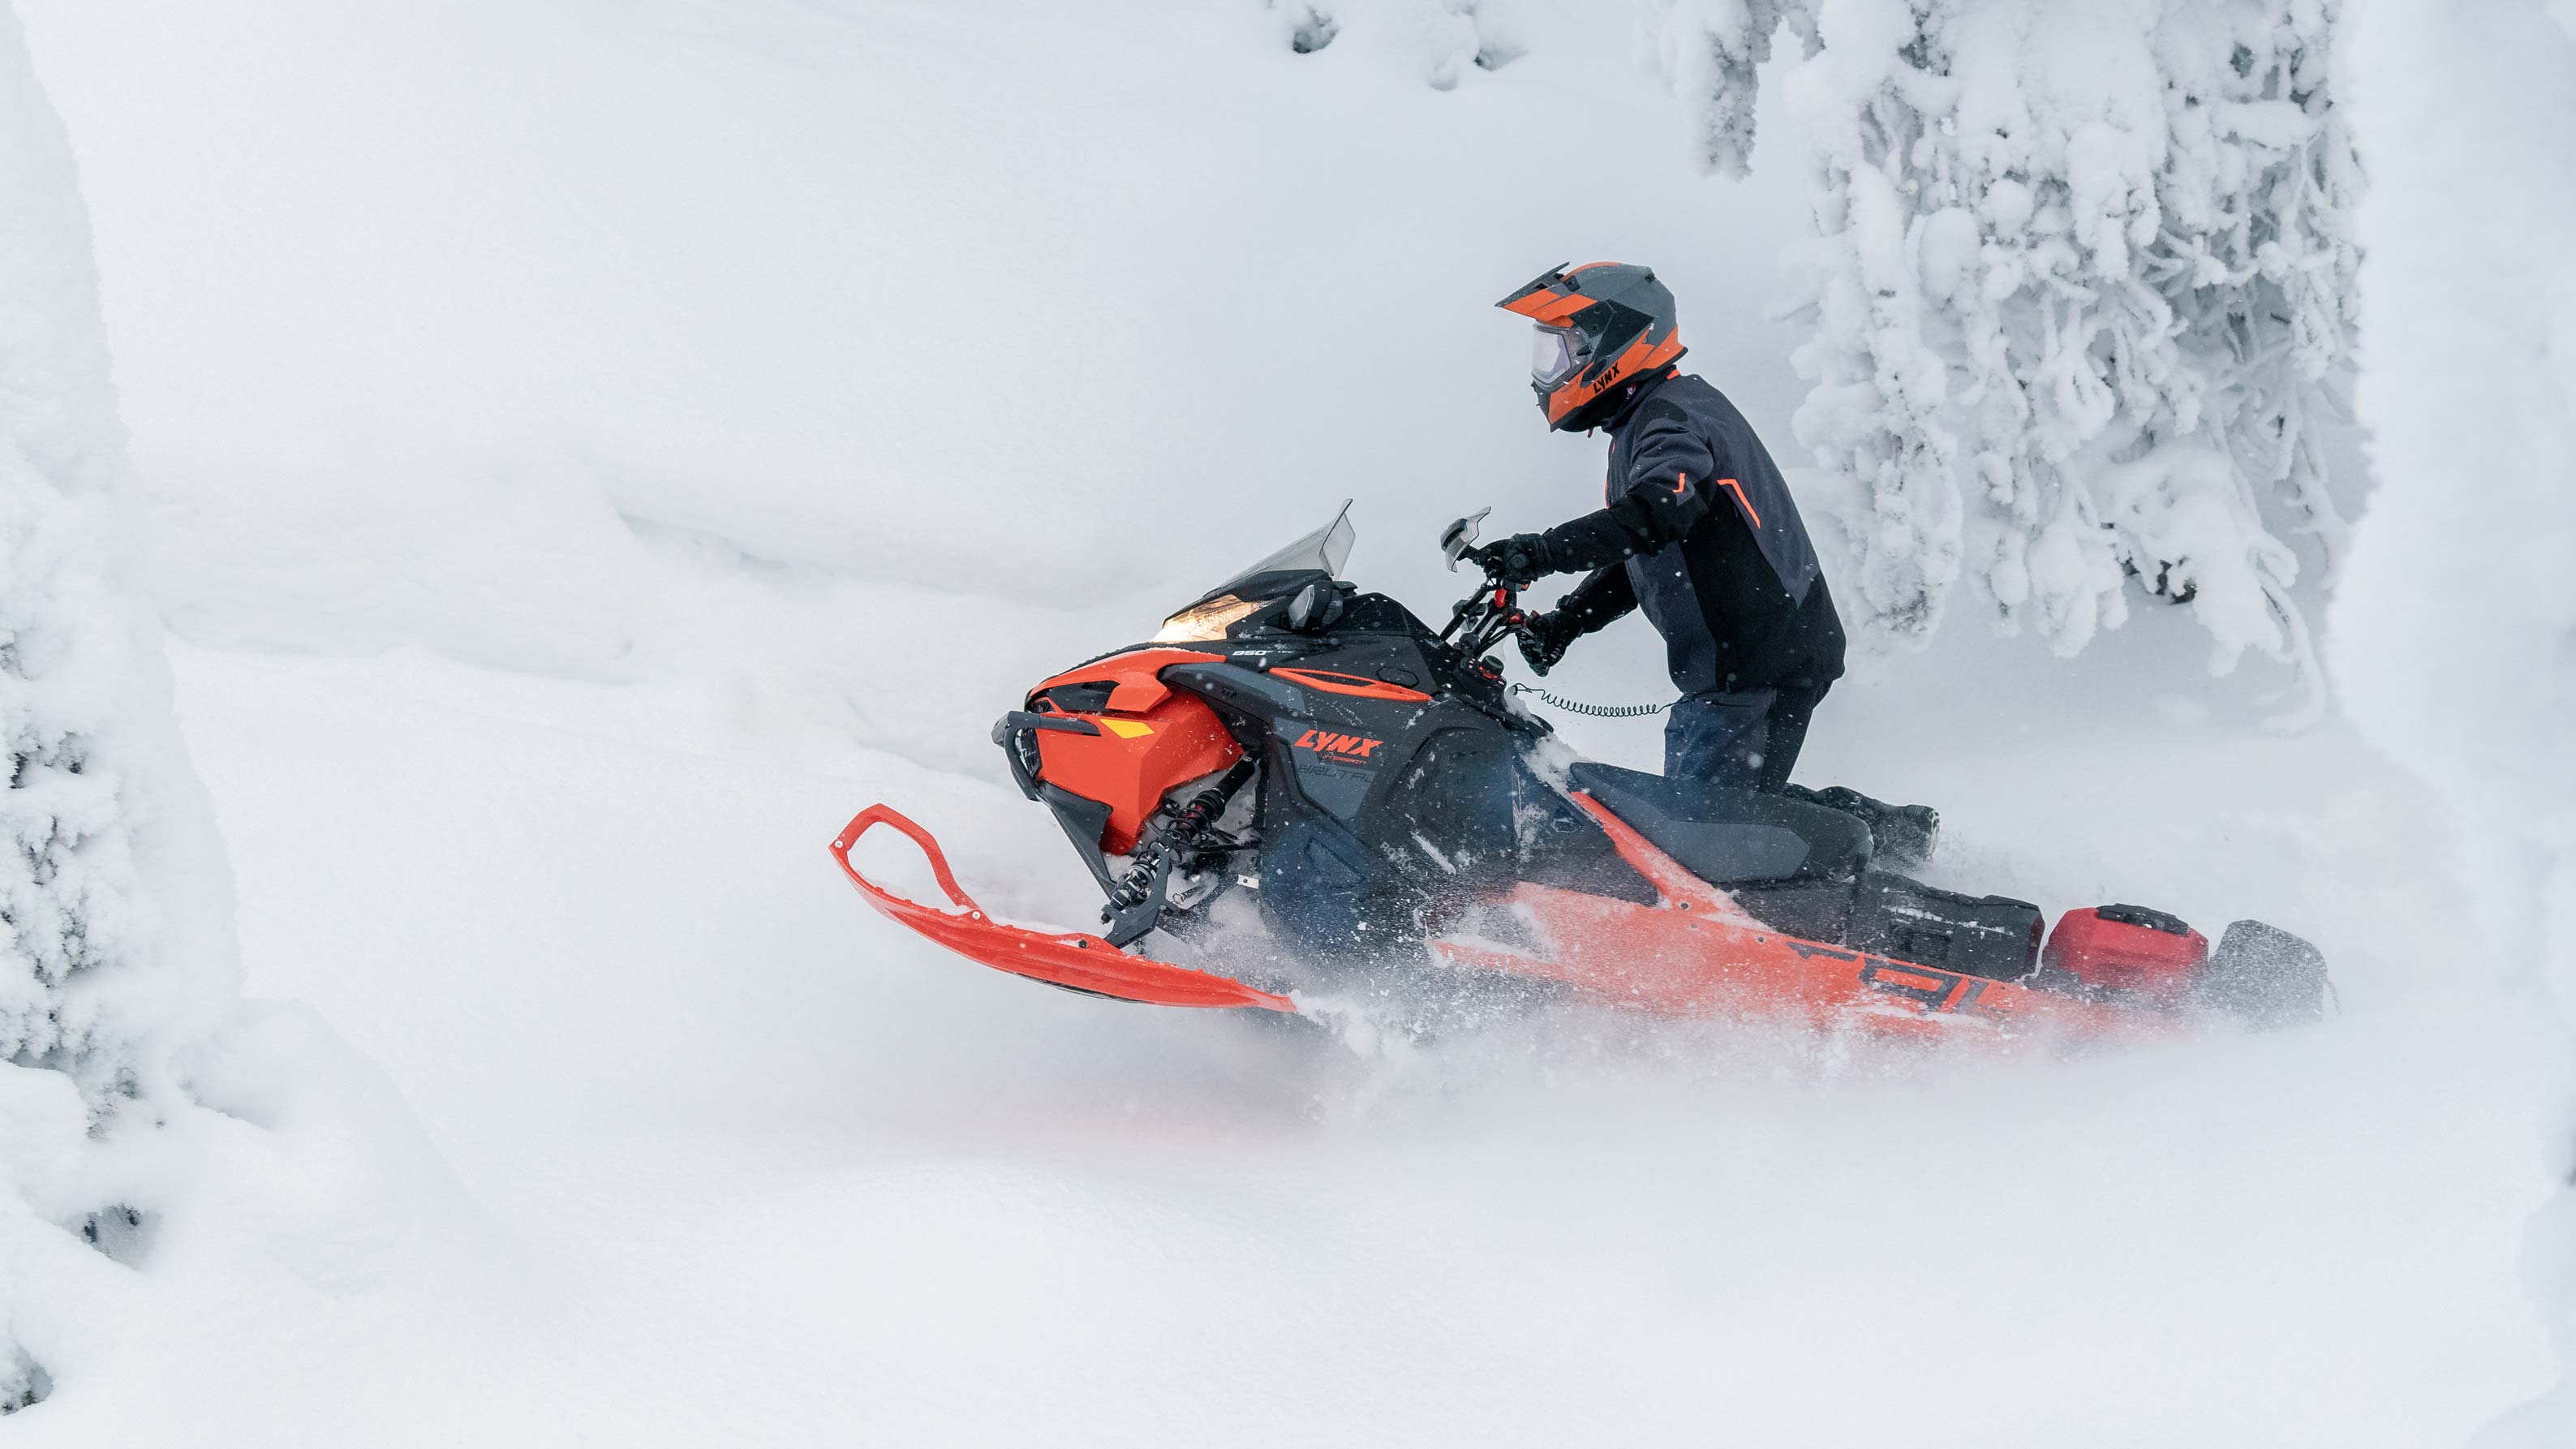 LinQ accessorized Lynx Xterrain Brutal snowmobile riding in deep snow